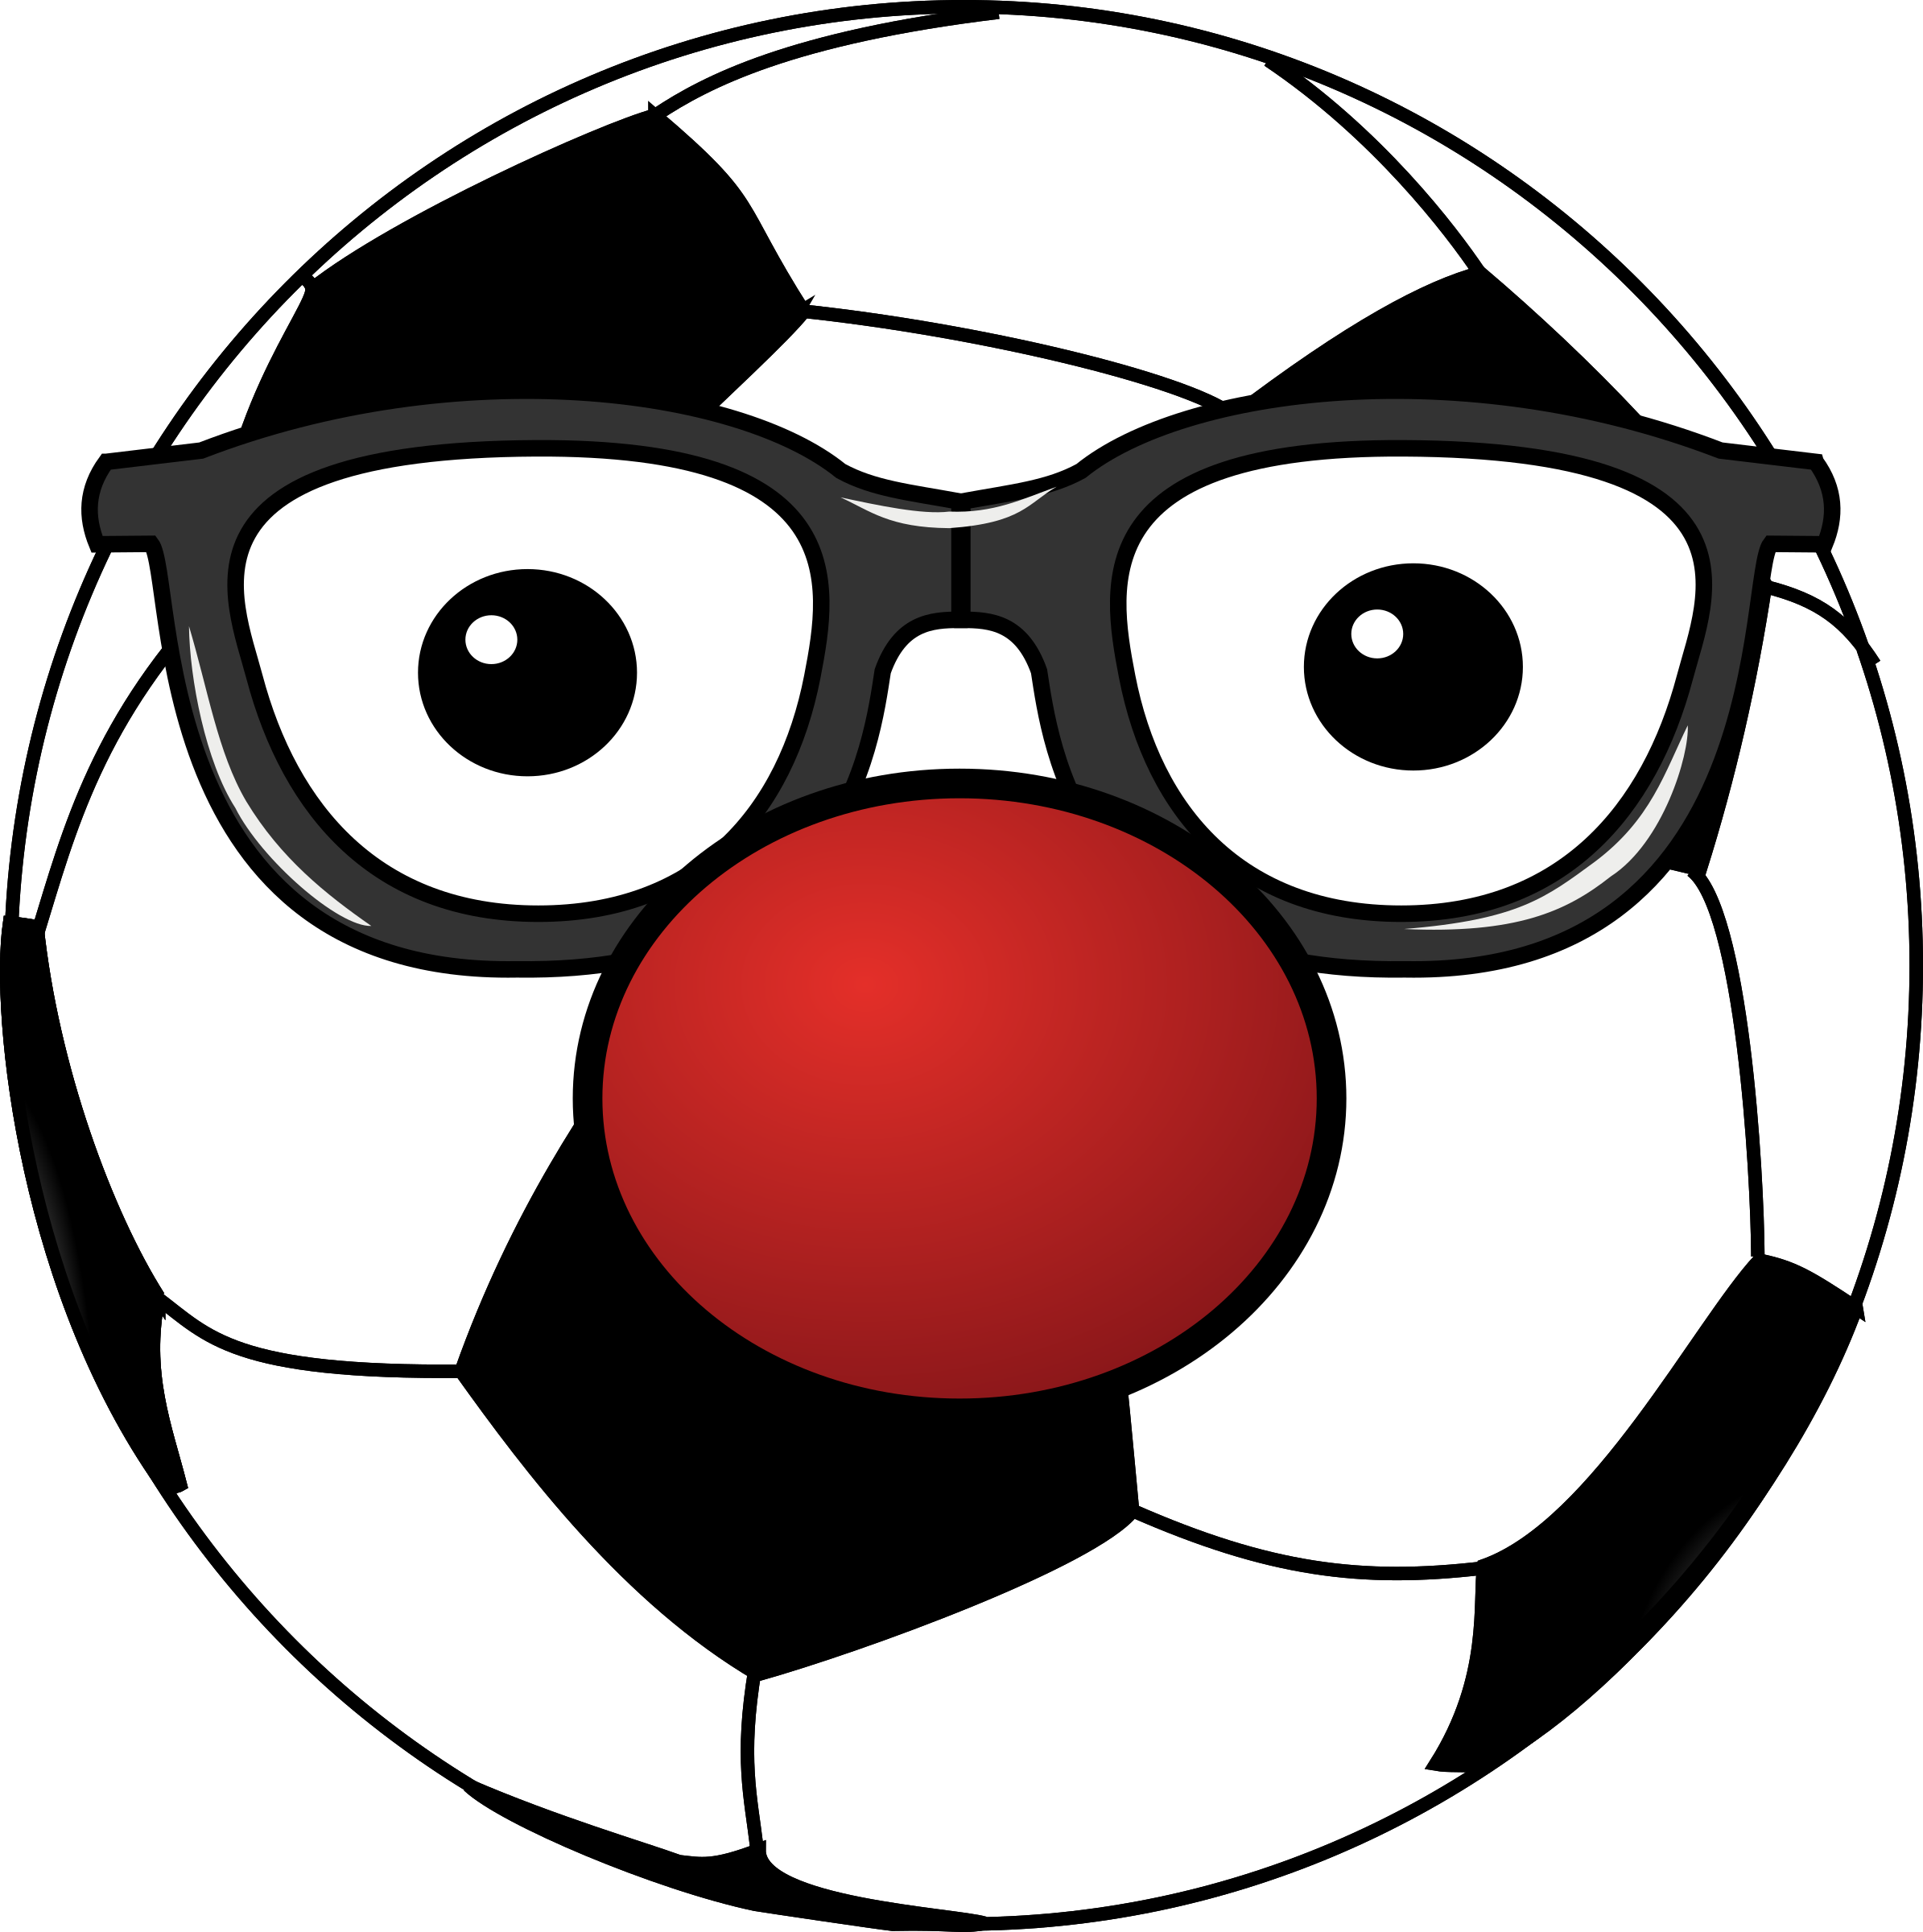 clipart soccer ball - photo #28